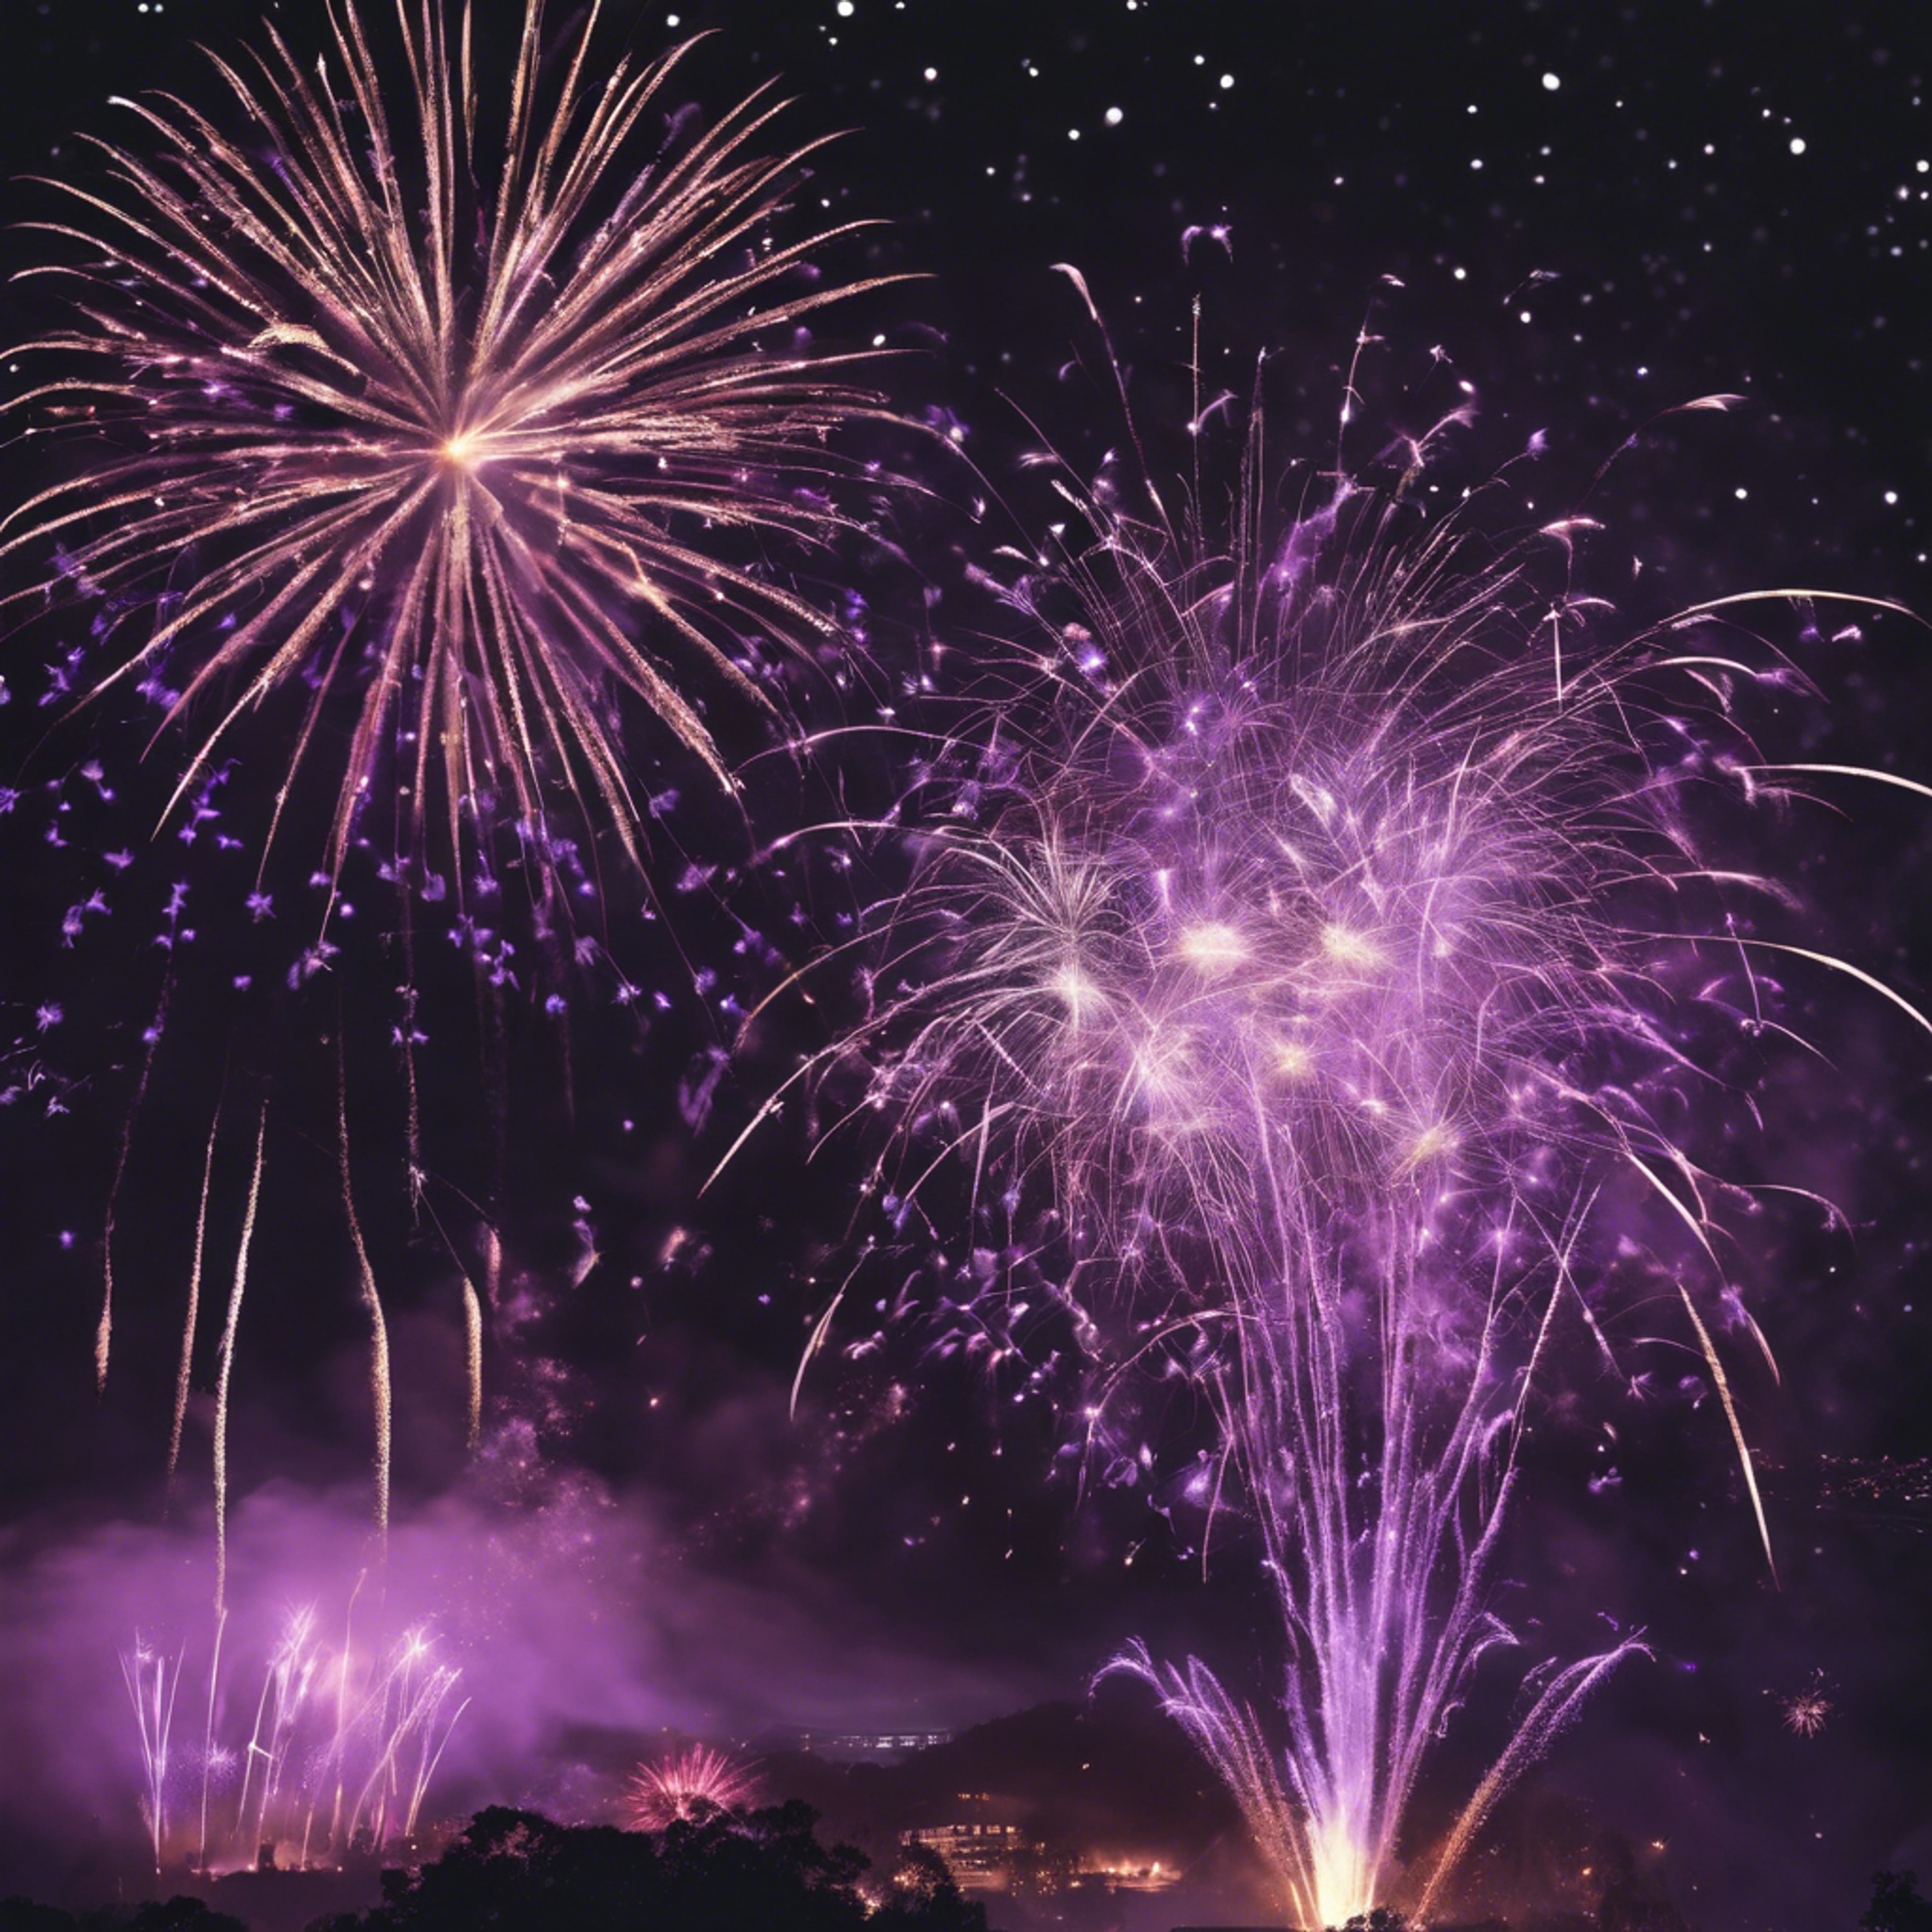 Black and purple fireworks lighting up the night sky during a grand celebration.壁紙[a63540e6fc8e4a549ec0]